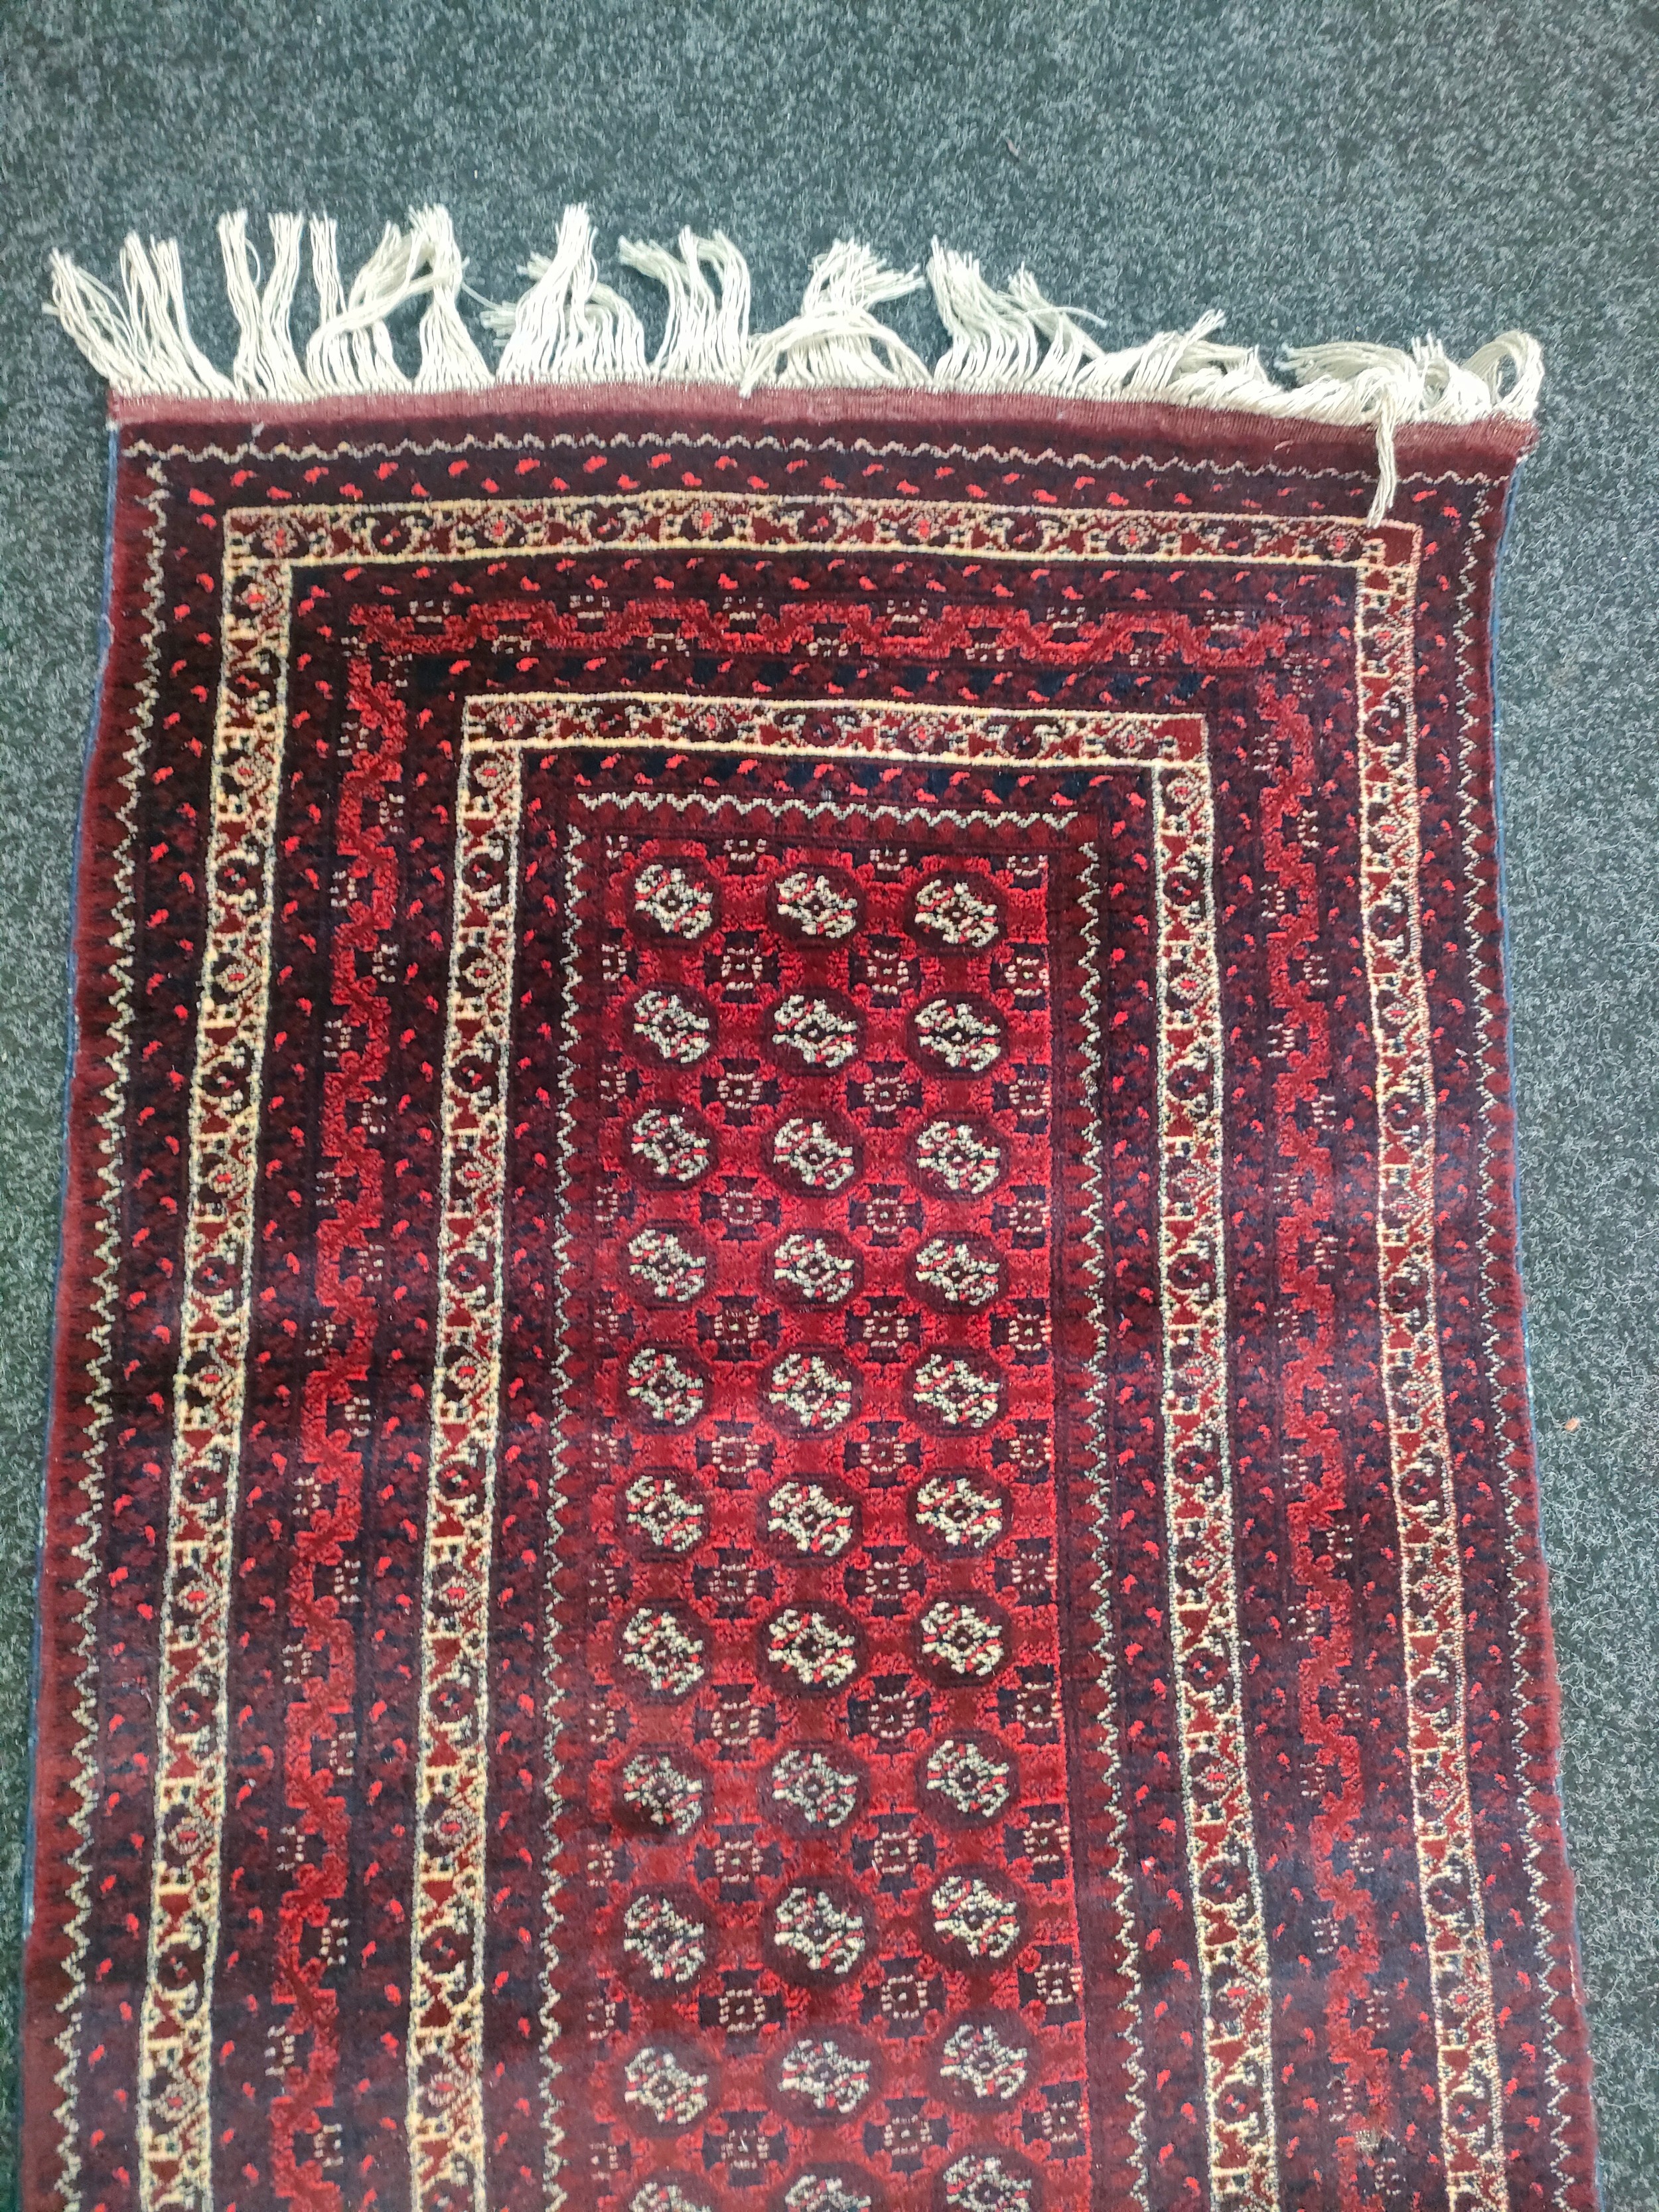 An Afghan hand woven rug [186x85cm] - Image 4 of 5